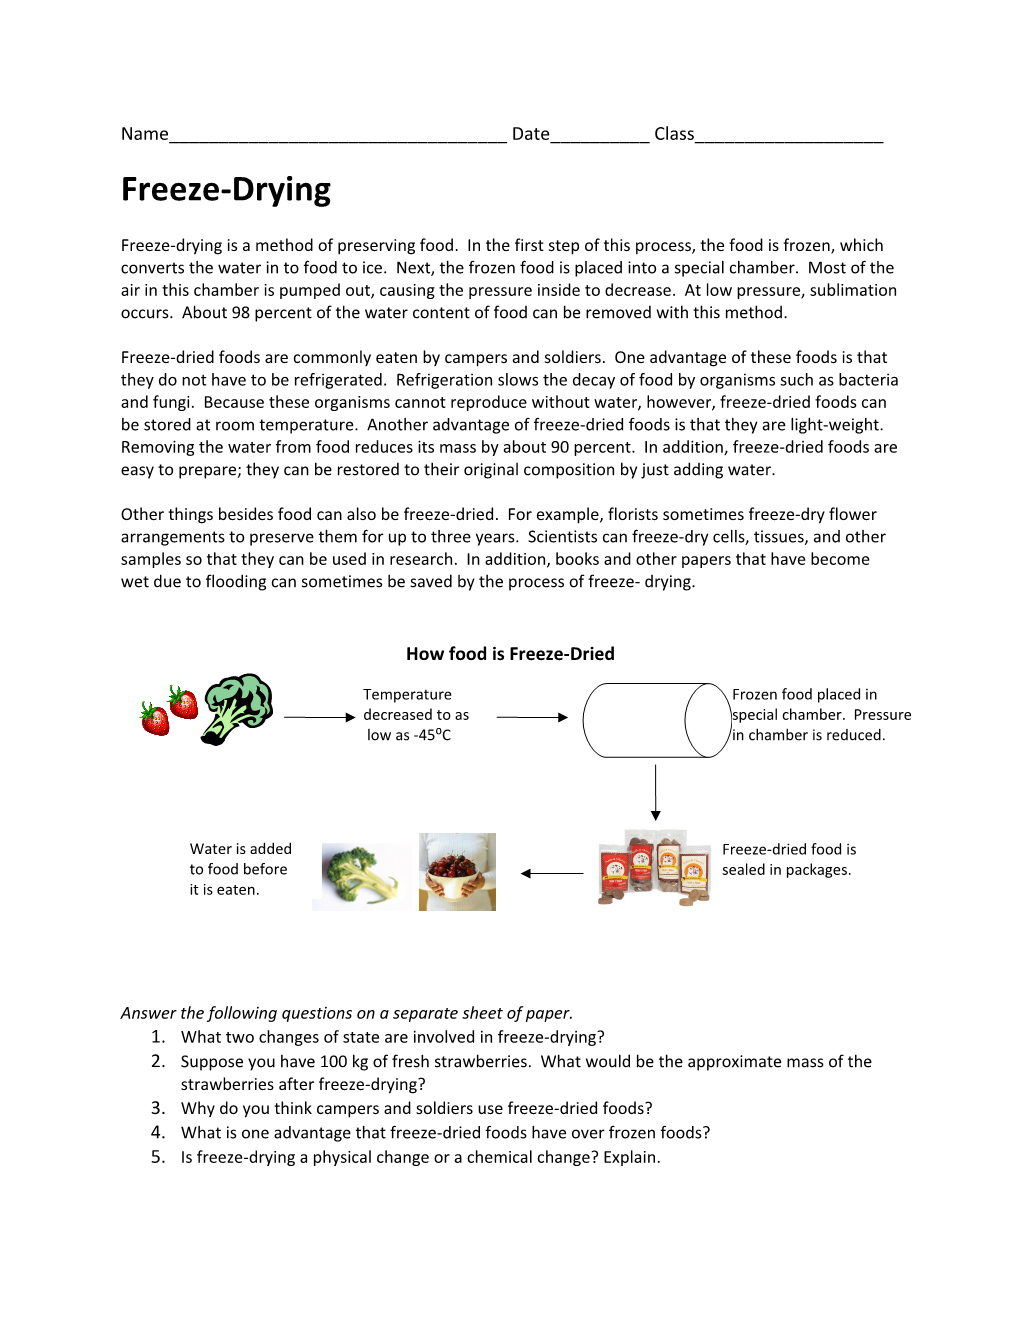 How Food Is Freeze-Dried